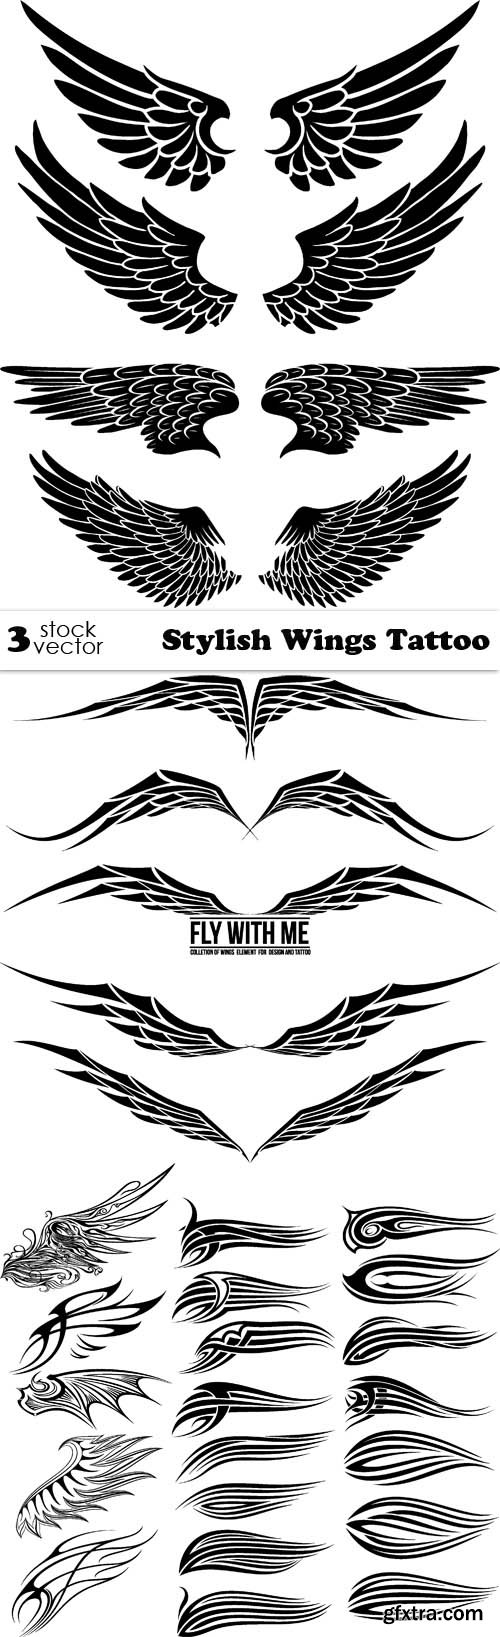 Vectors - Stylish Wings Tattoo